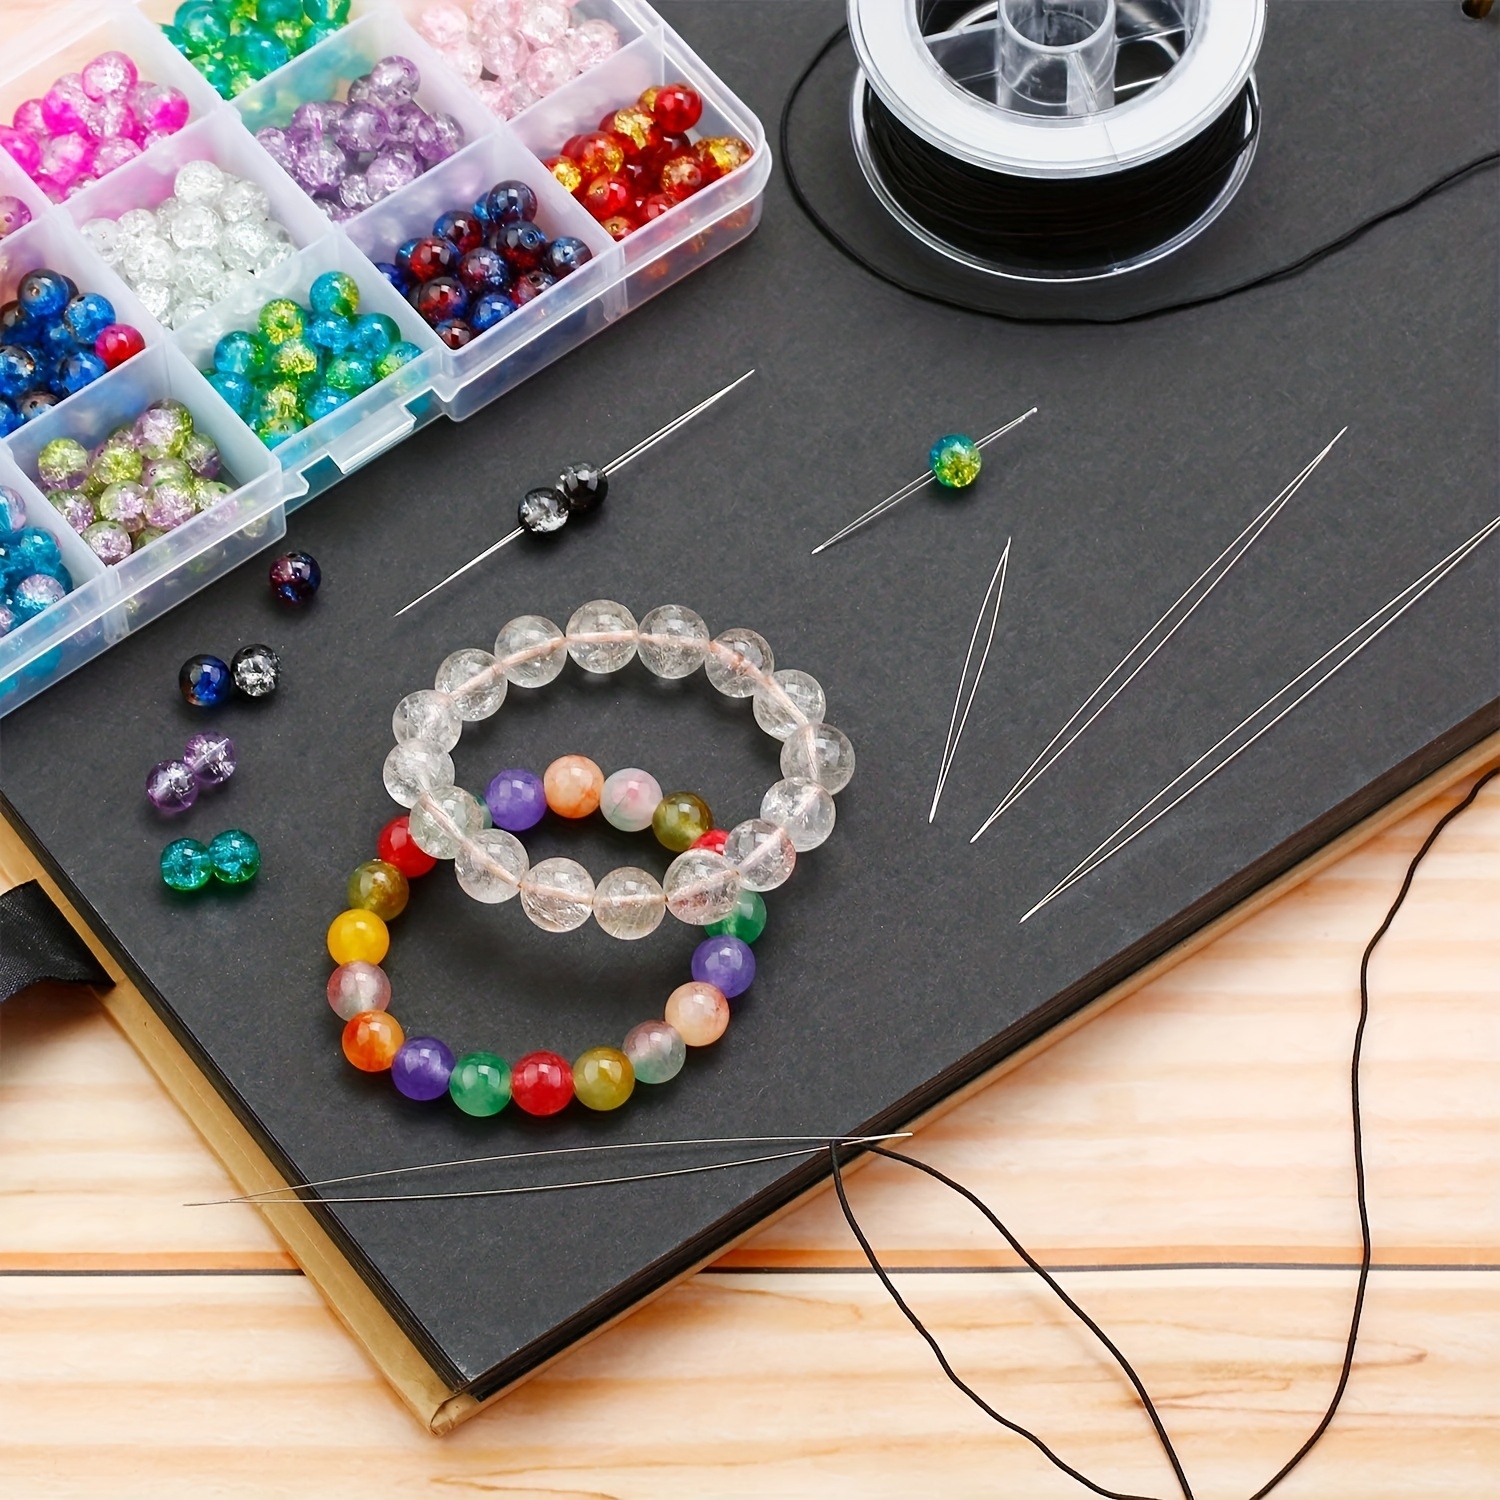 Big-Eyed Beading Needles For Seed Beads, Big Eye Embroidery